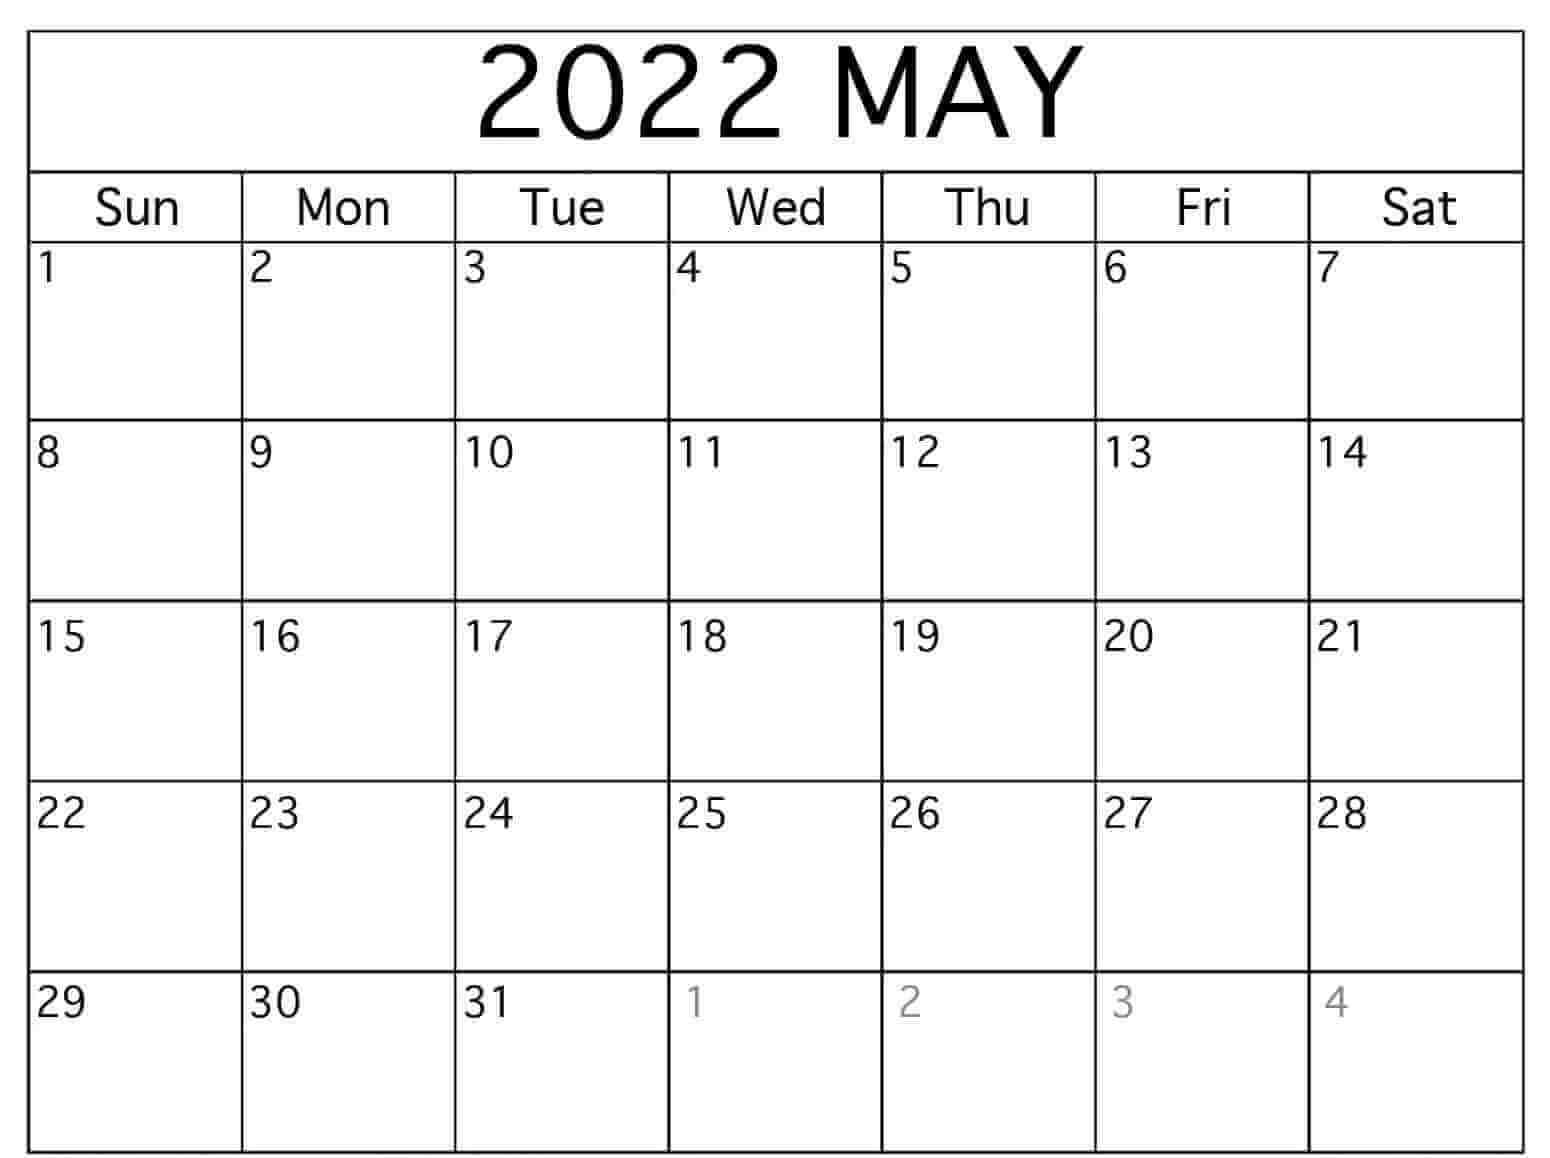 2022 may calendar pdf